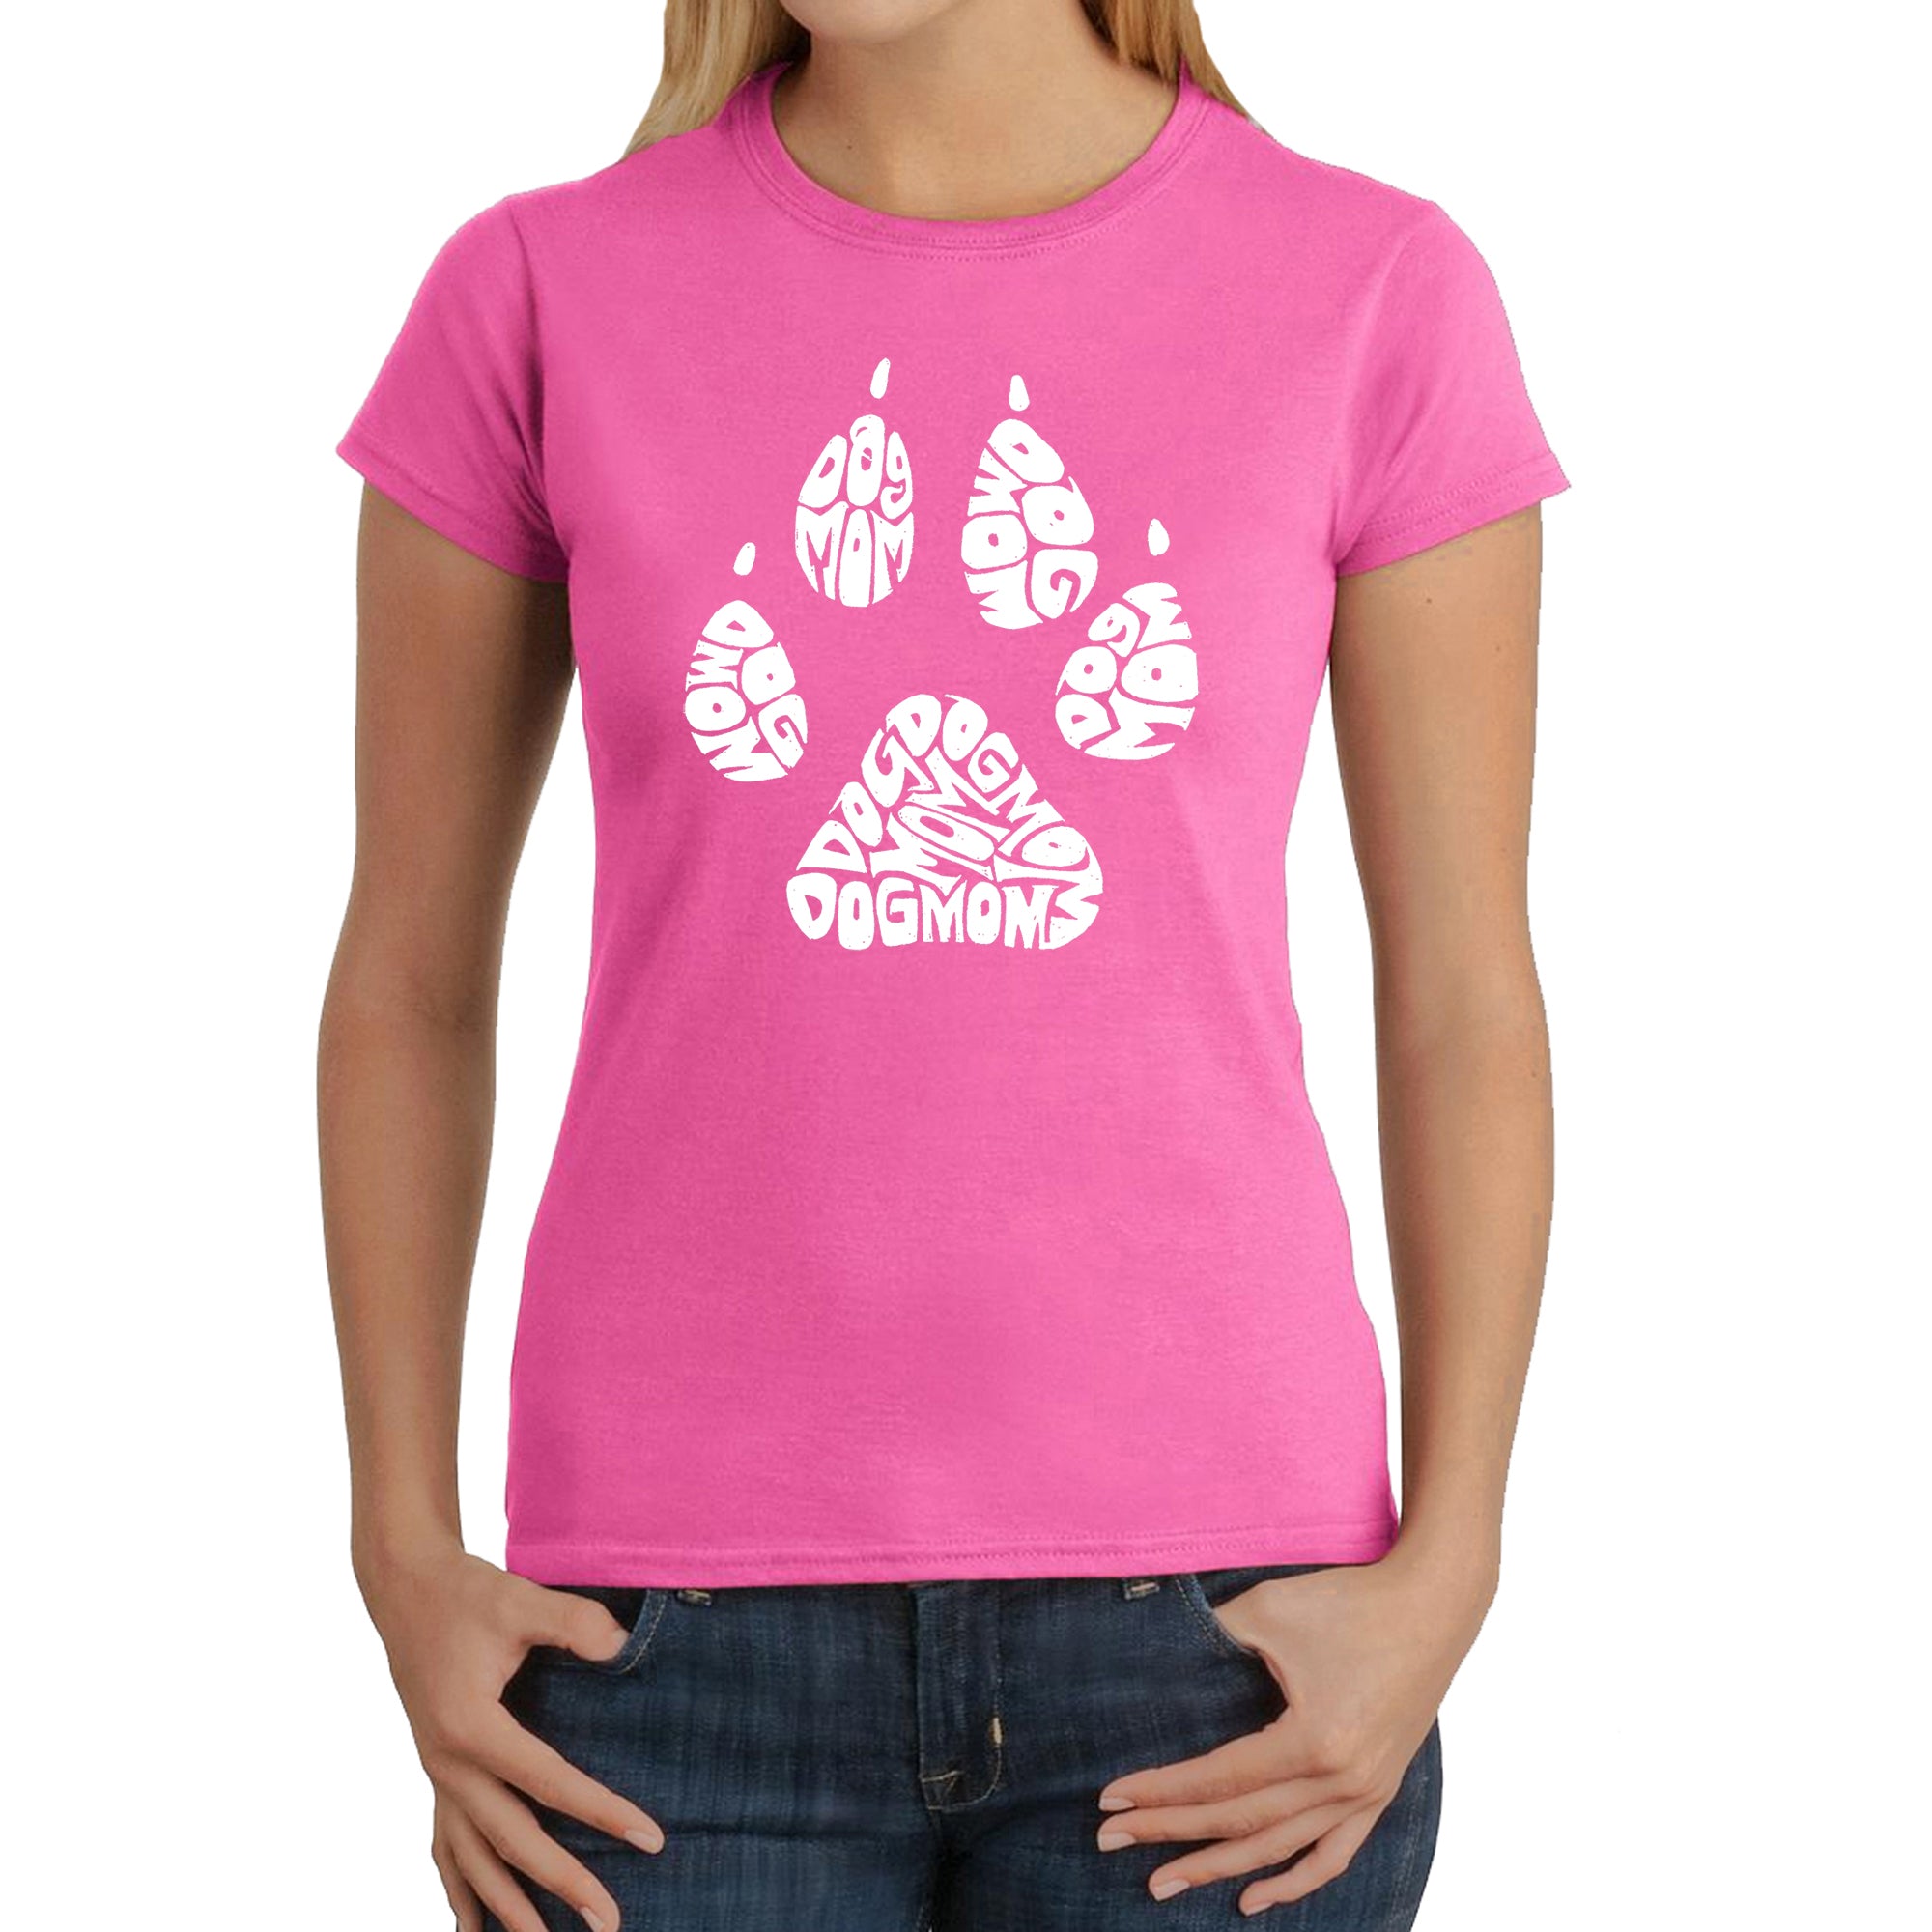 Dog Mom - Women's Word Art T-Shirt - Pink - Large